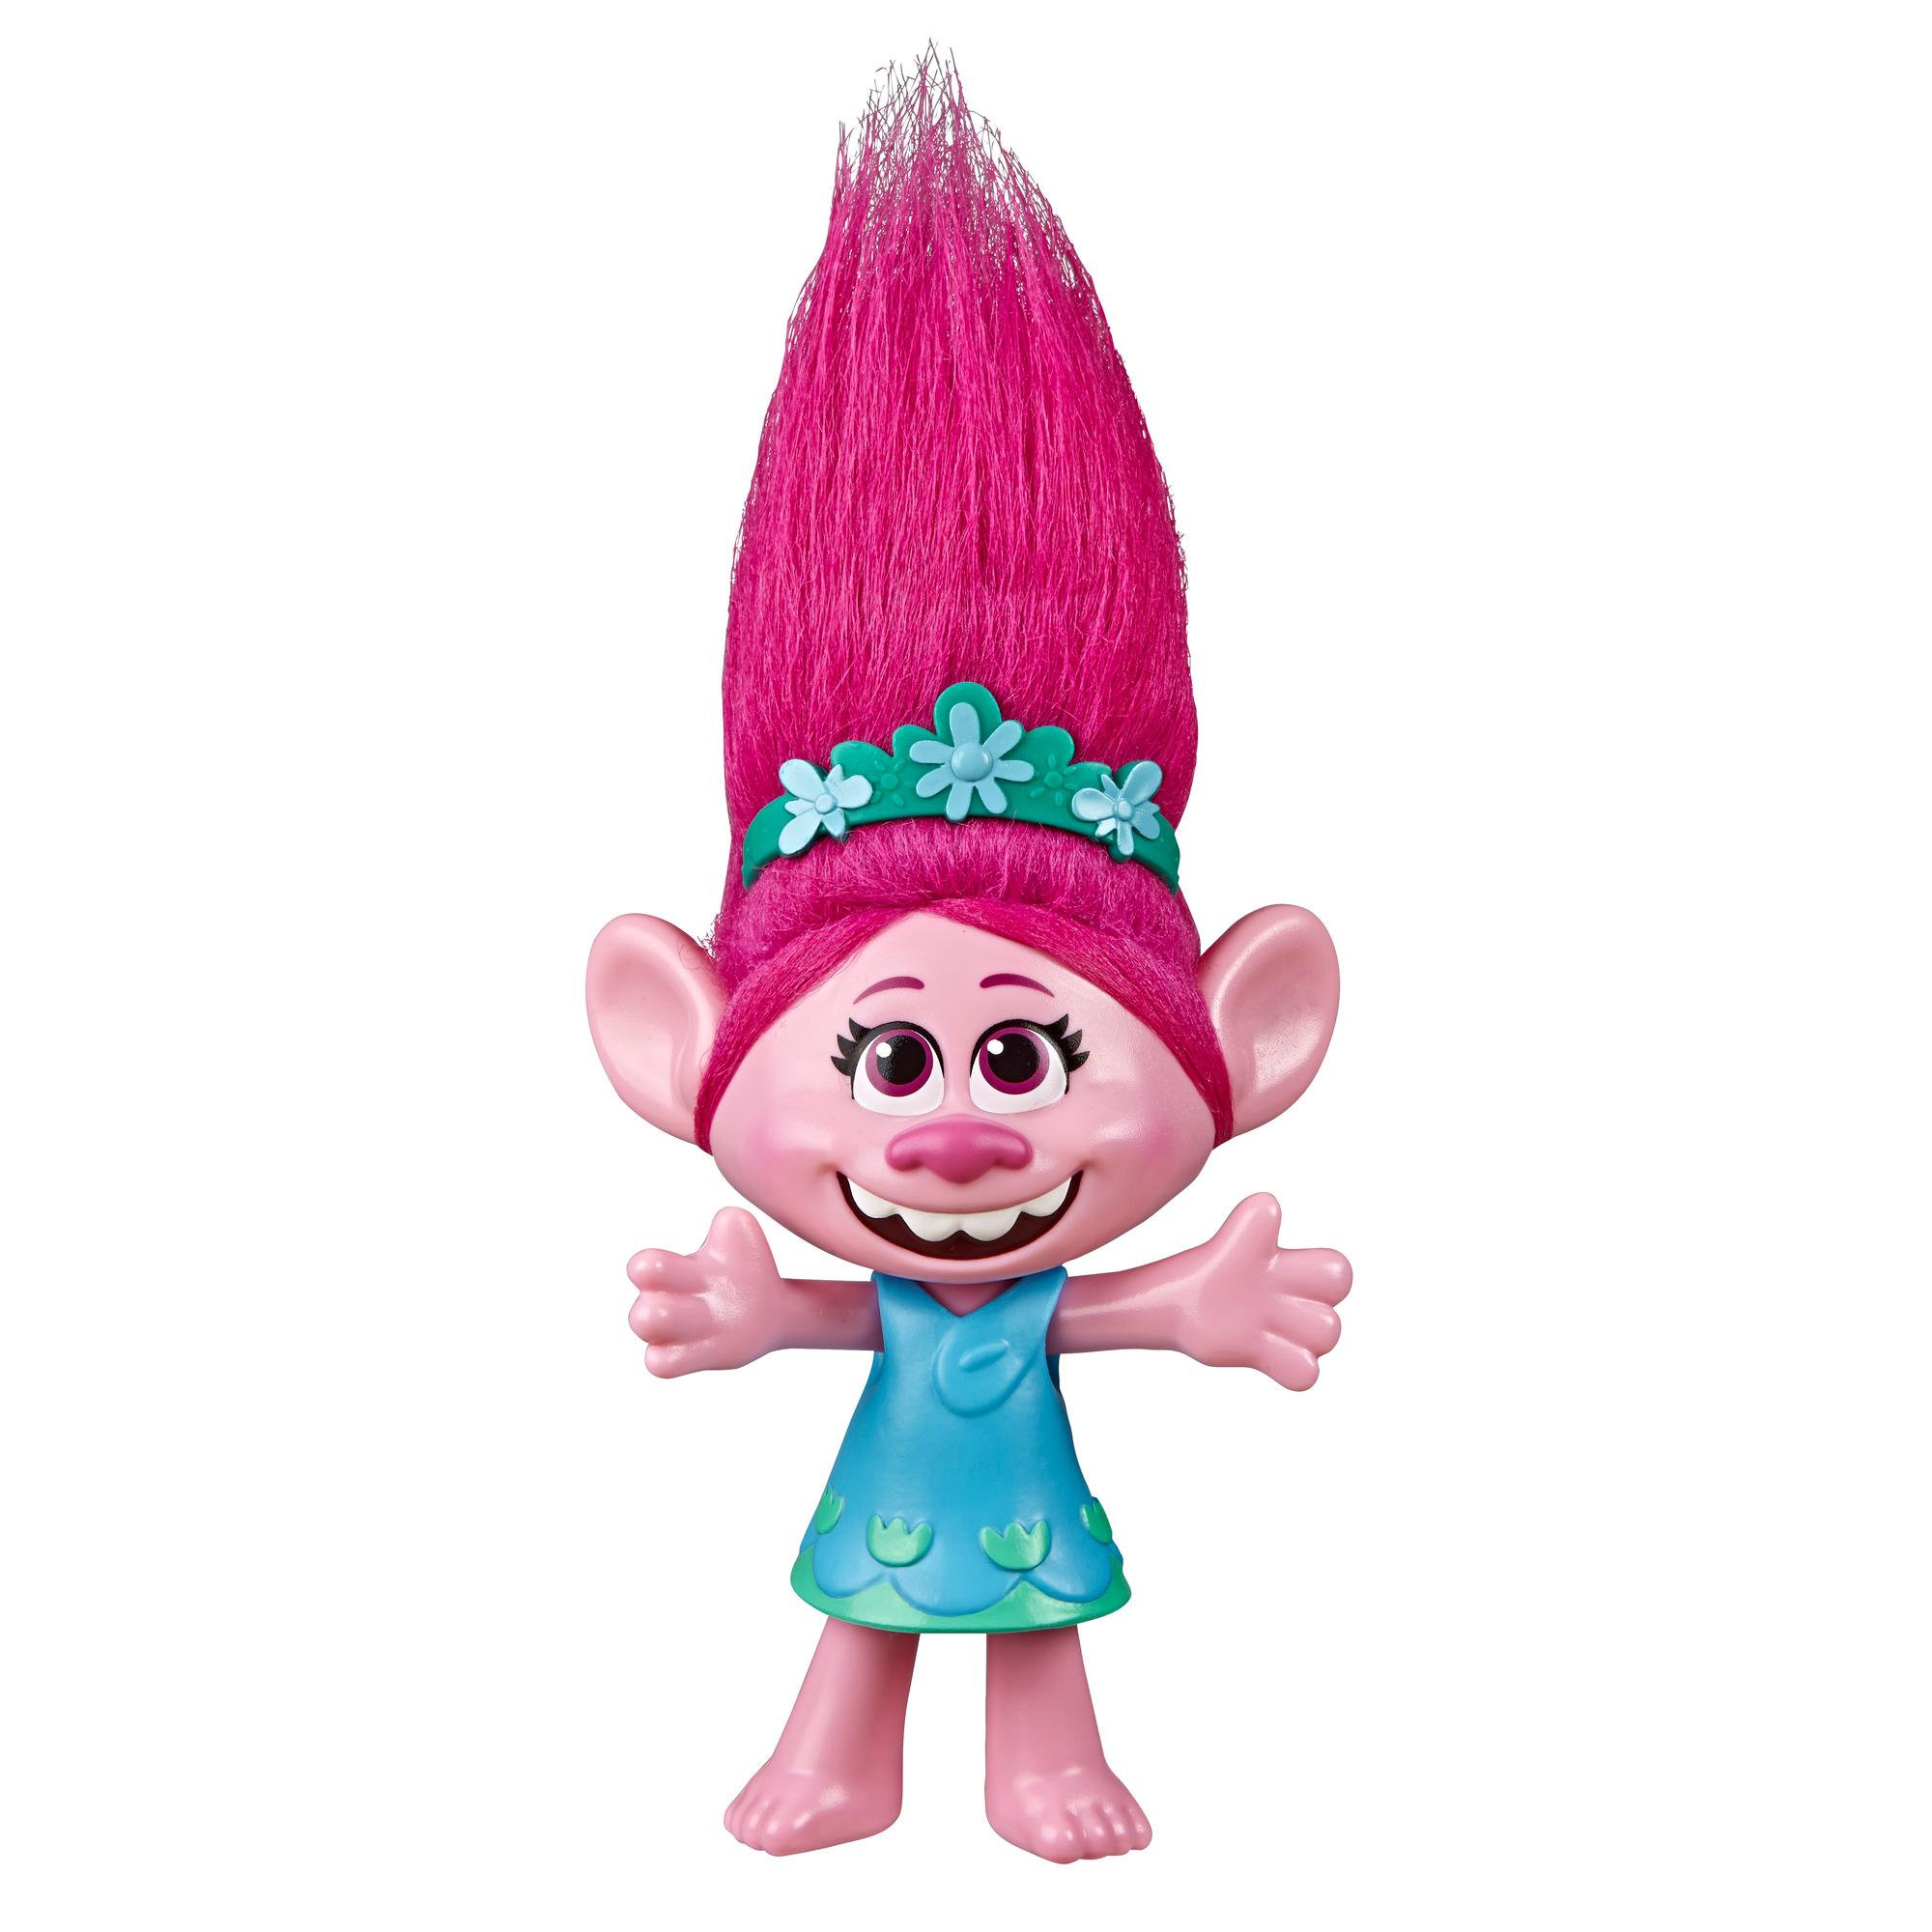 DreamWorks Trolls Pop Music Poppy Singing Doll Toy, Sings Trolls Just Want to Have Fun from DreamWorksTrolls World Tour